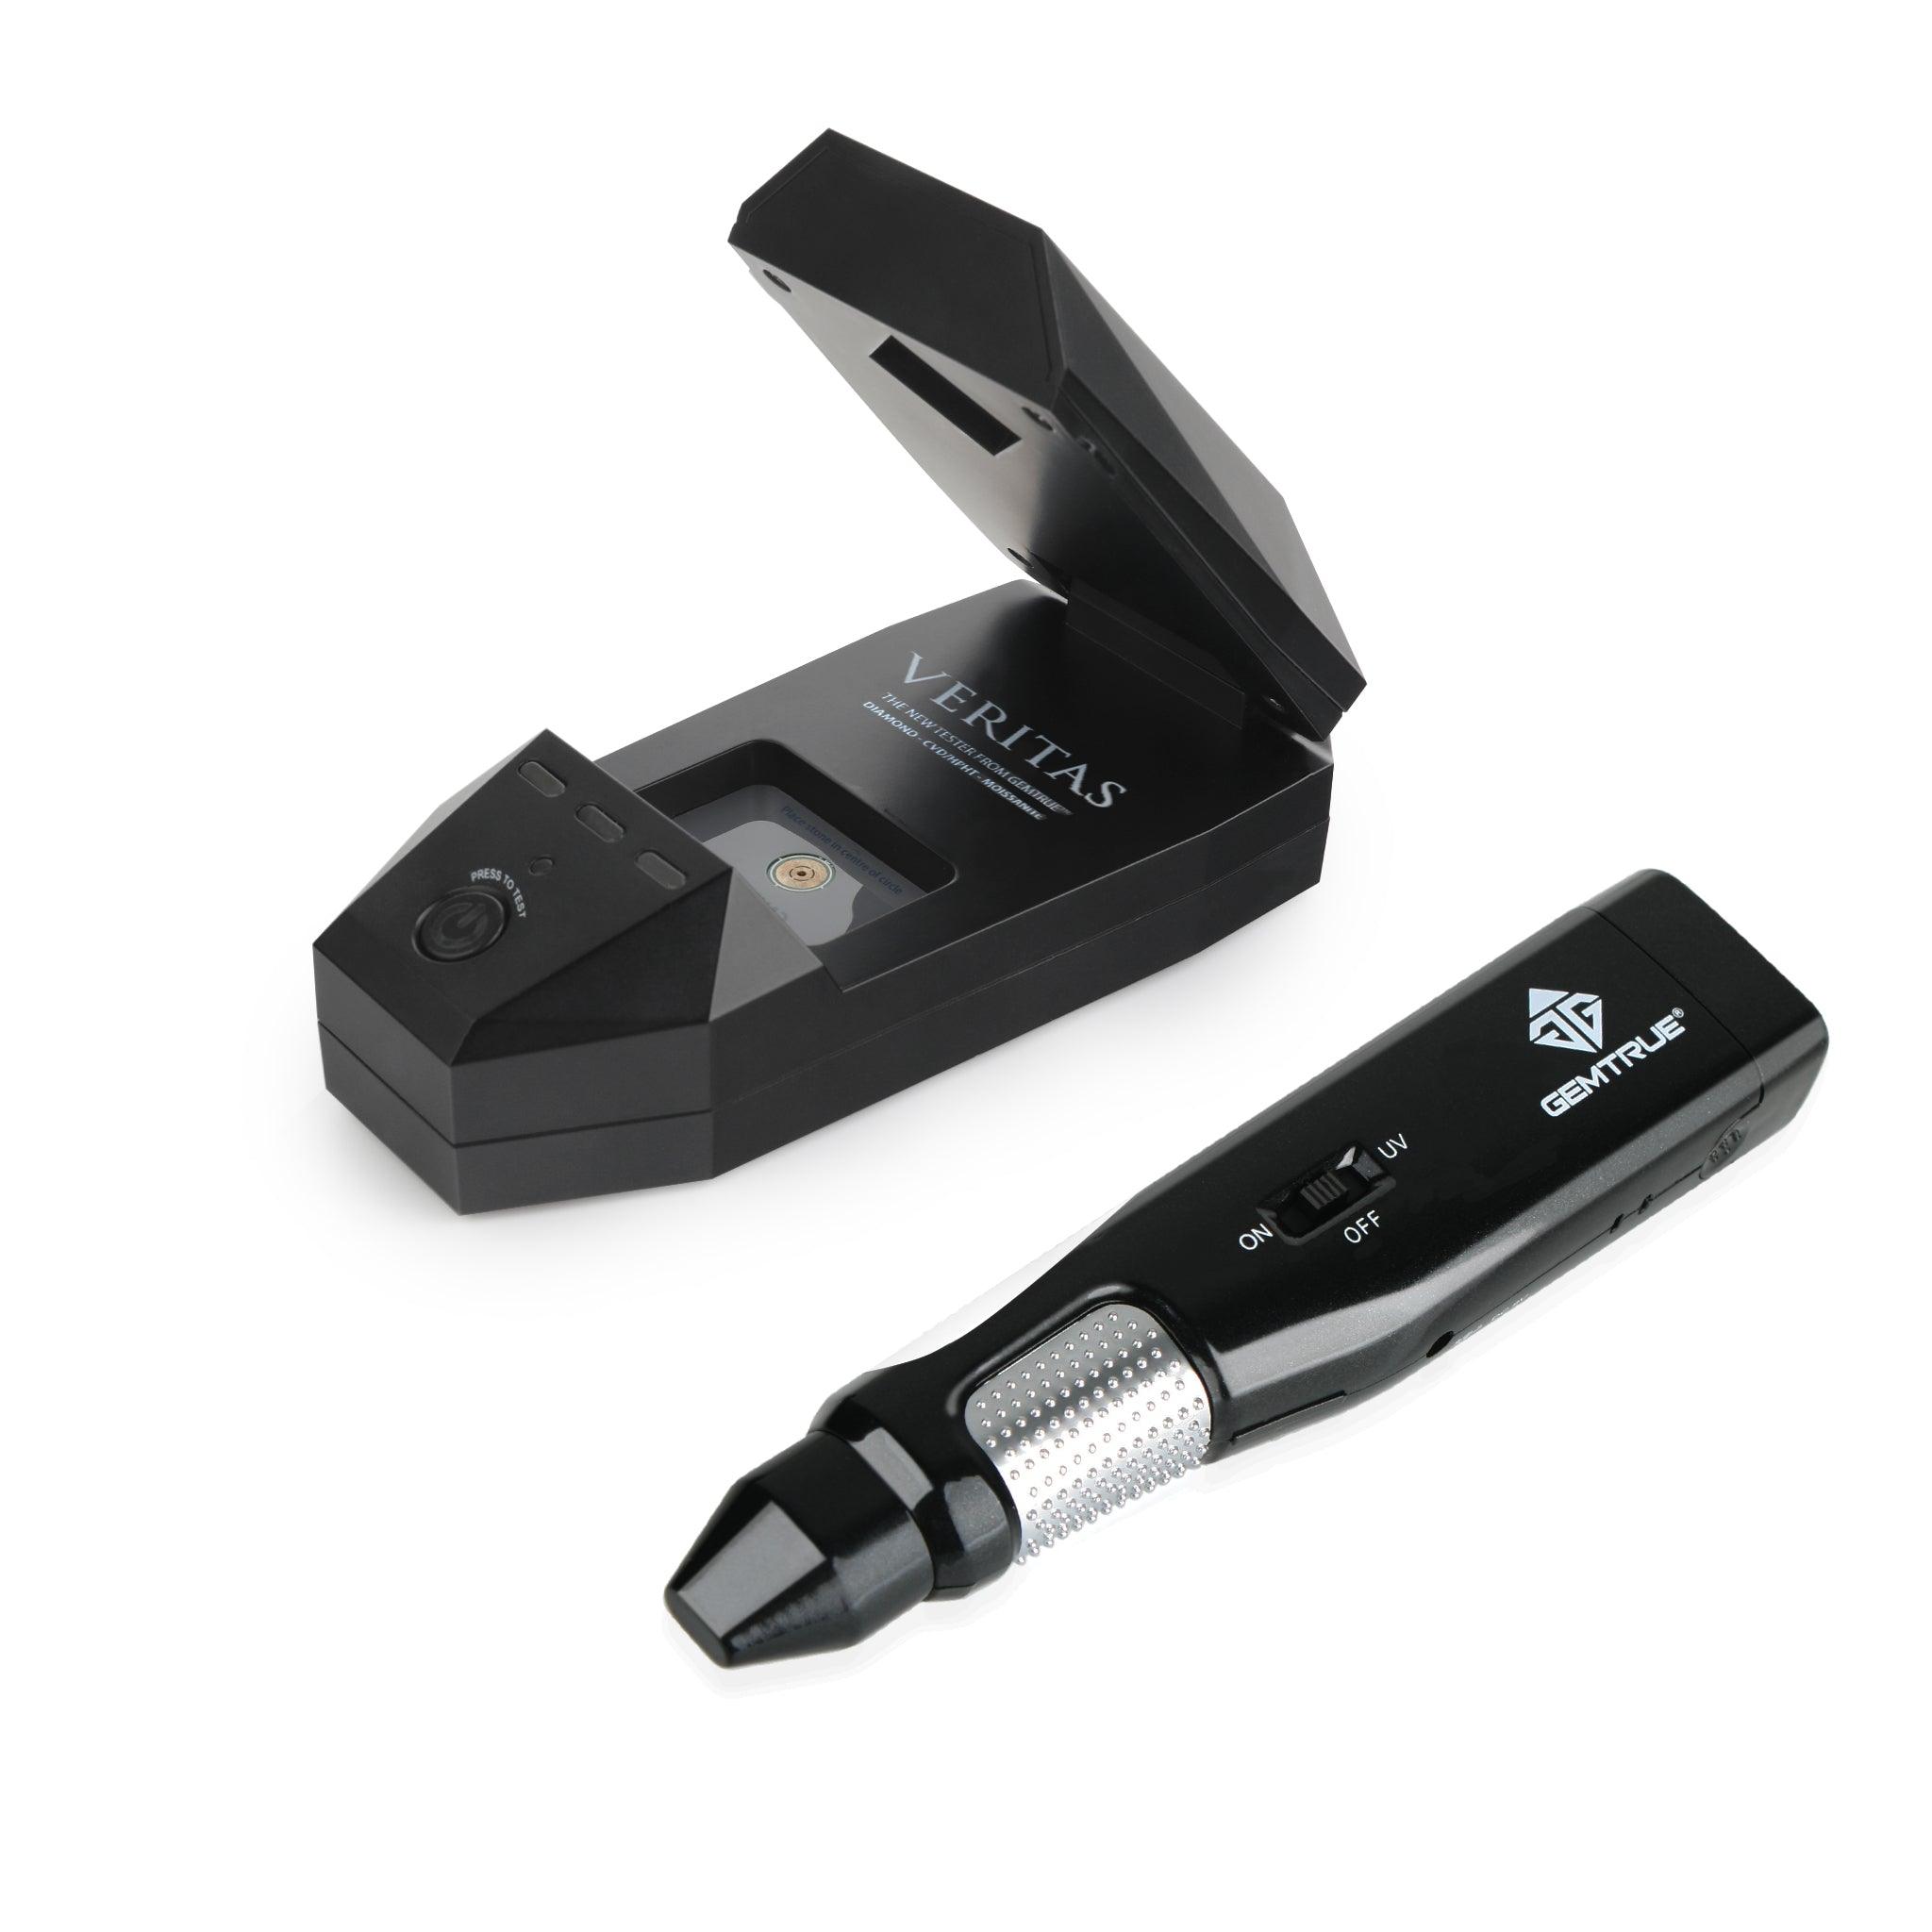 Diamond Tester, LED Indicator Moissan Tester Pen Jewelry Testing